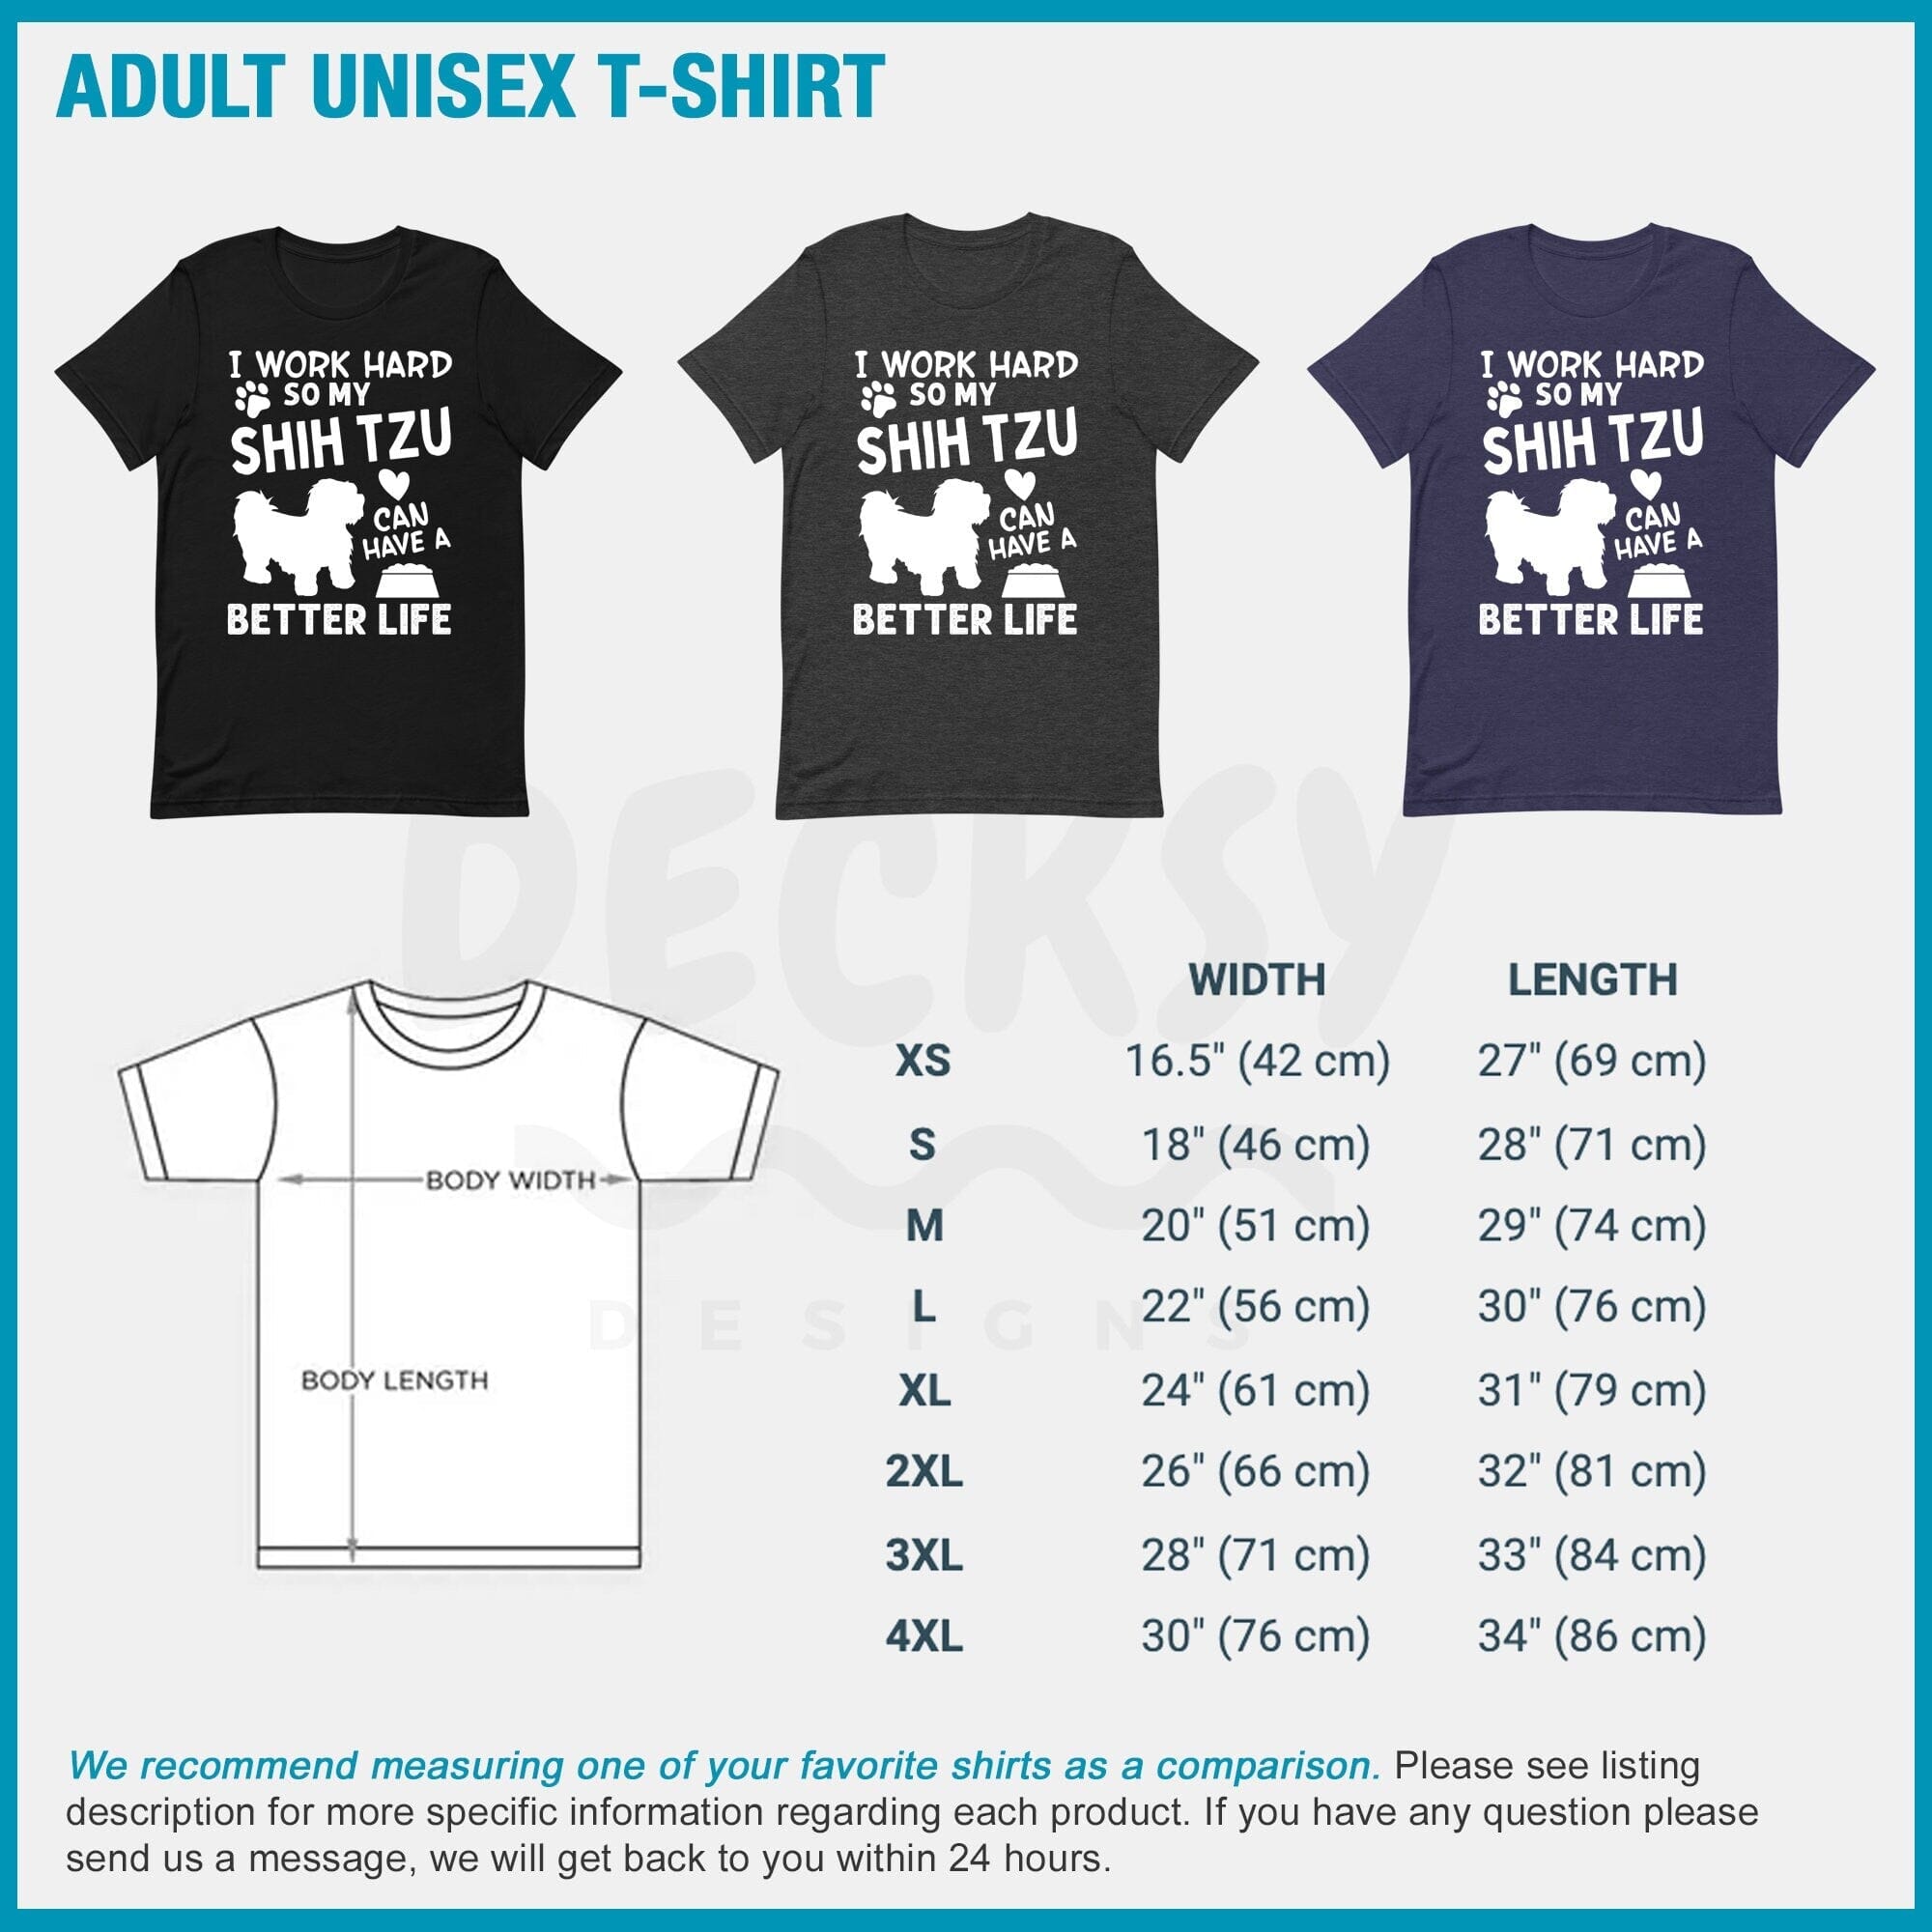 Funny Shih Tzu Shirt, Shih Tzu Dog Gift-Clothing:Gender-Neutral Adult Clothing:Tops & Tees:T-shirts:Graphic Tees-DecksyDesigns